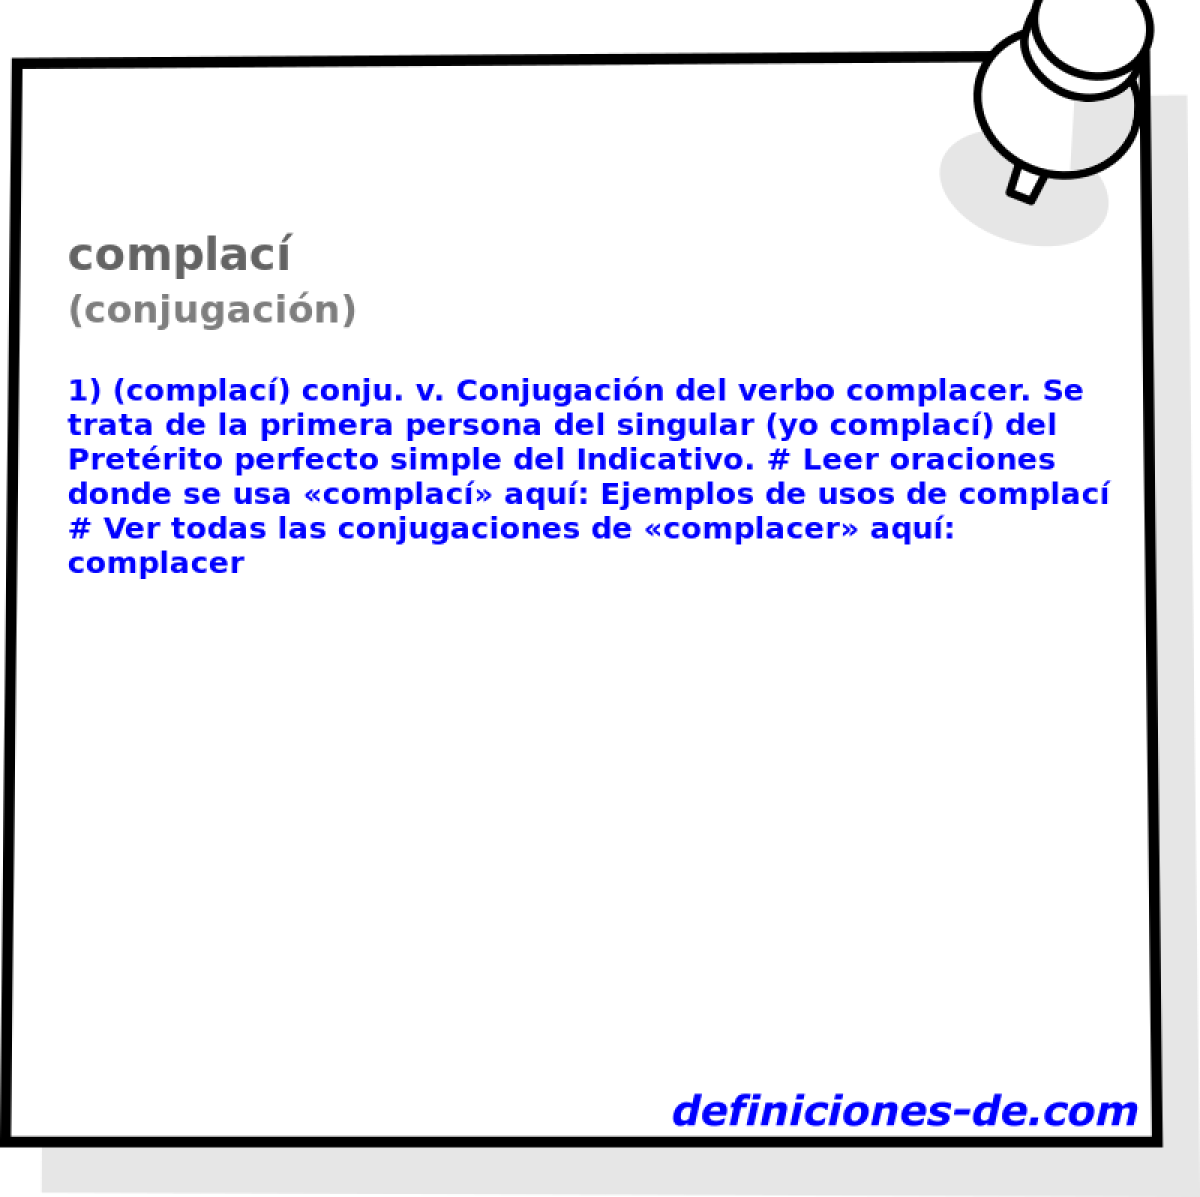 complac (conjugacin)